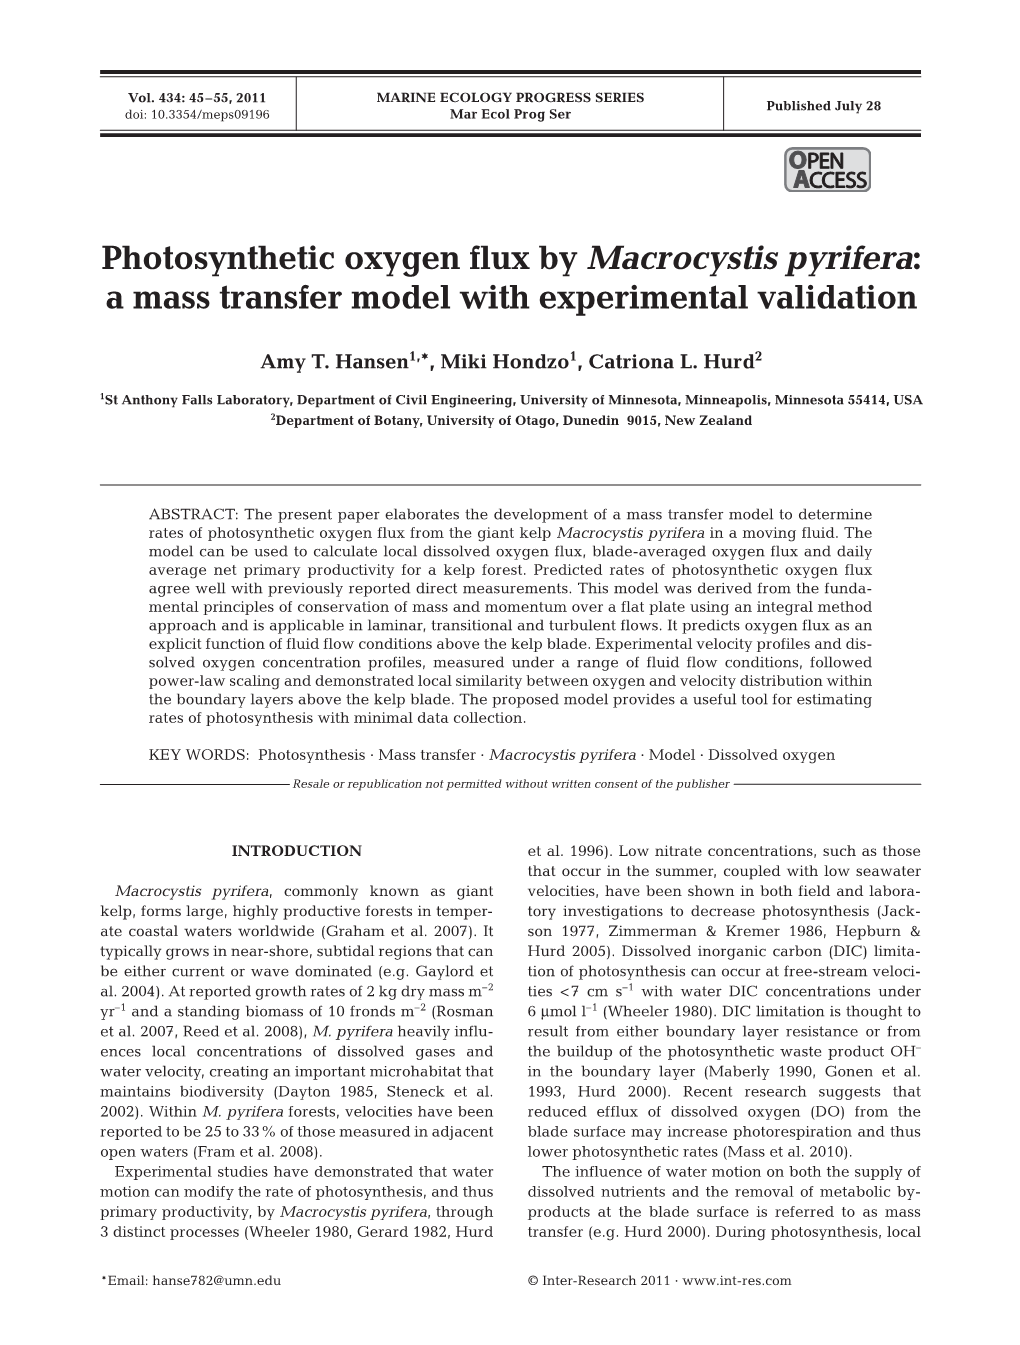 Photosynthetic Oxygen Flux by Macrocystis Pyrifera: a Mass Transfer Model with Experimental Validation